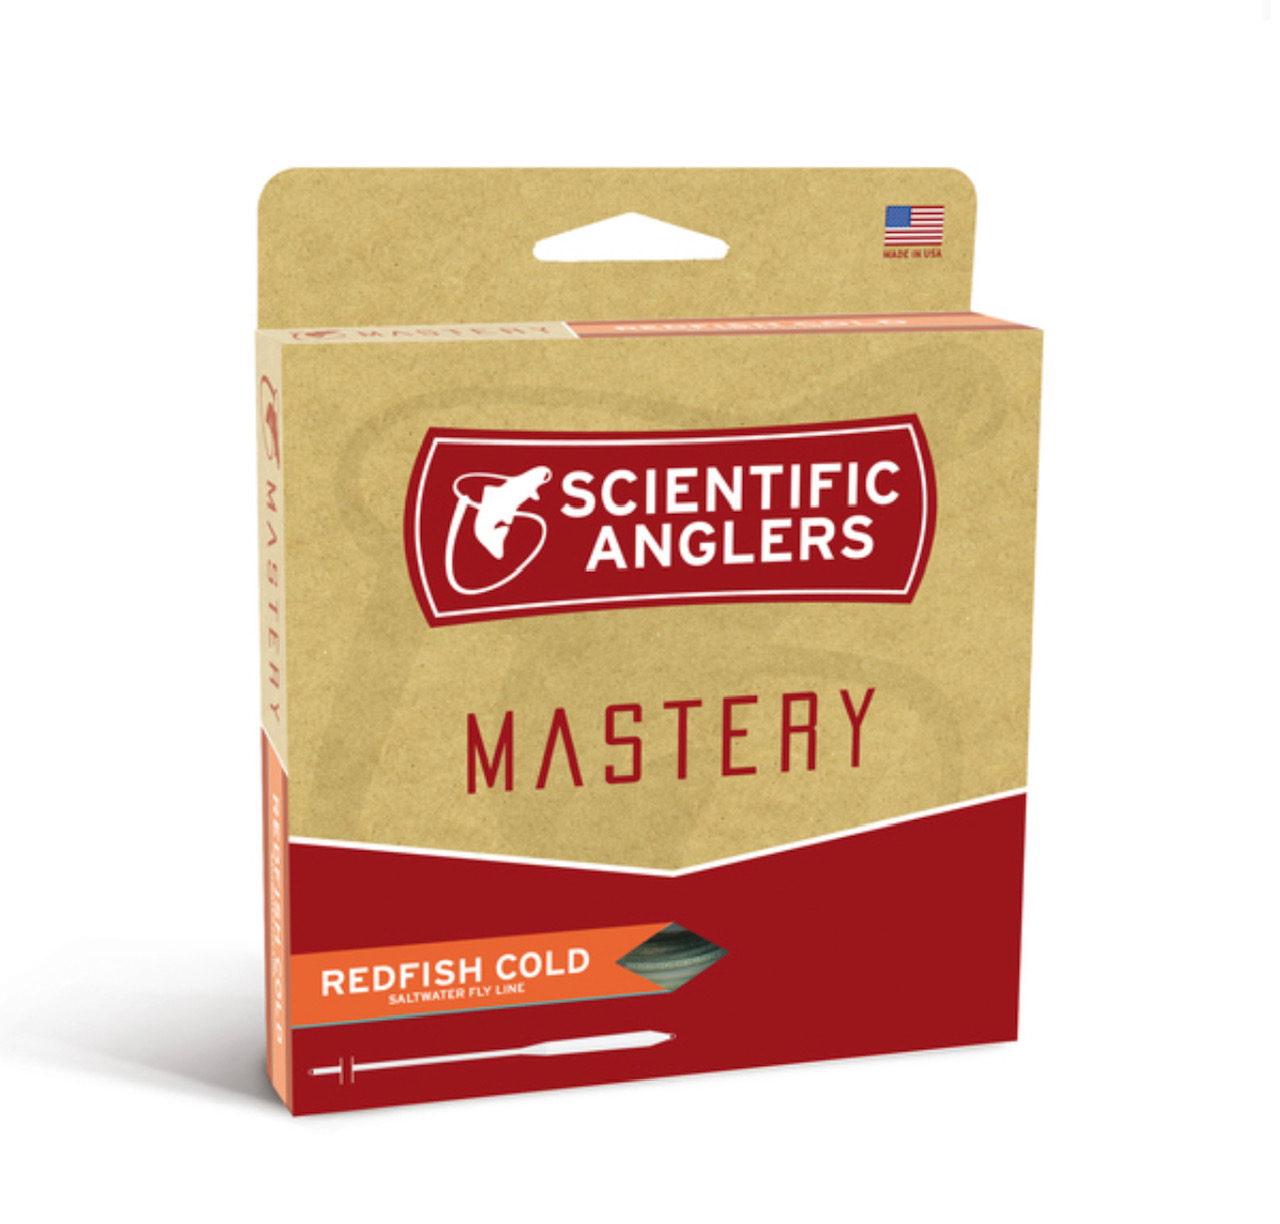 Scientific Anglers Mastery Redfish